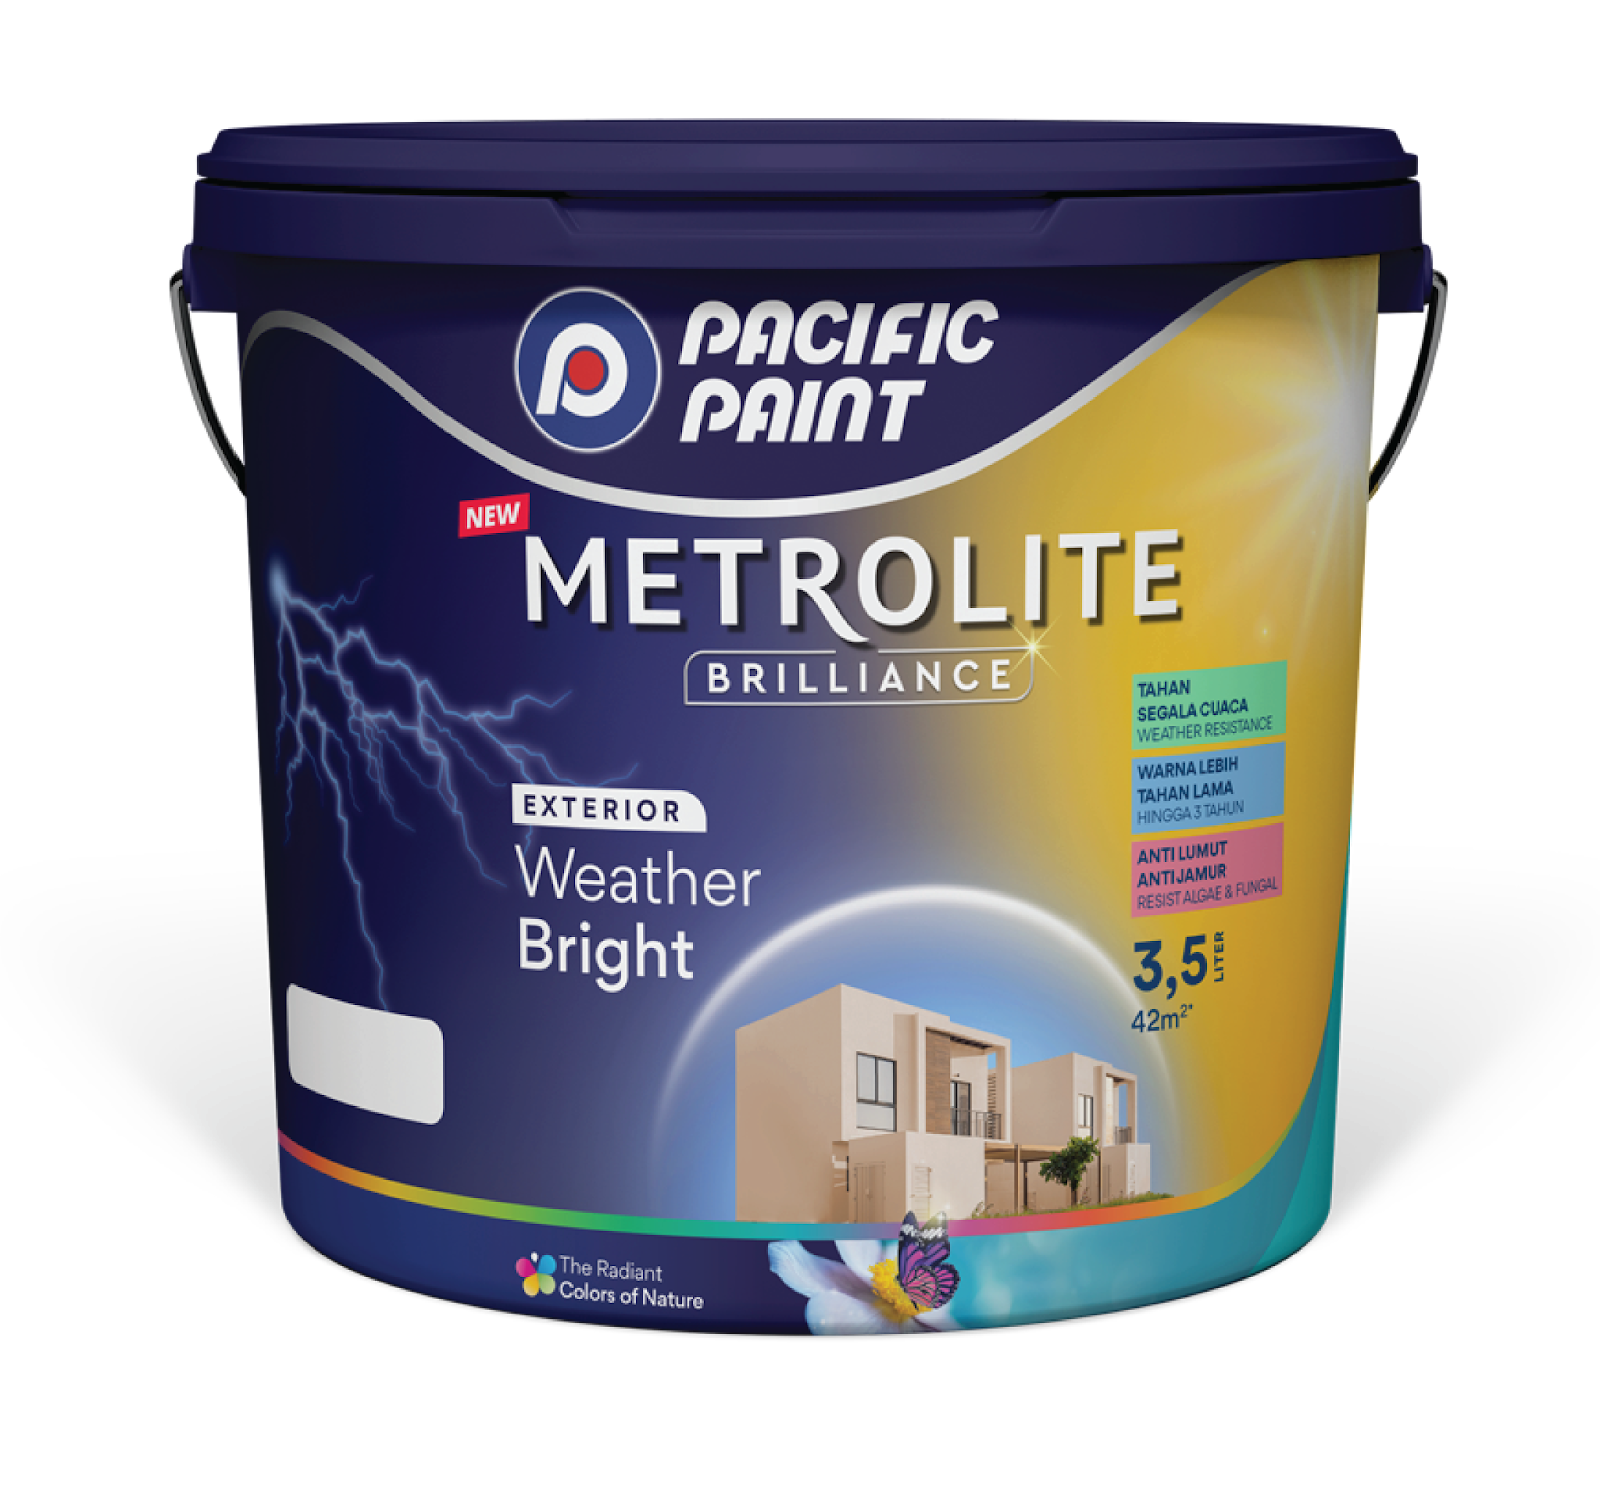 Pacific Paint Metrolite Brilliance Weather Bright